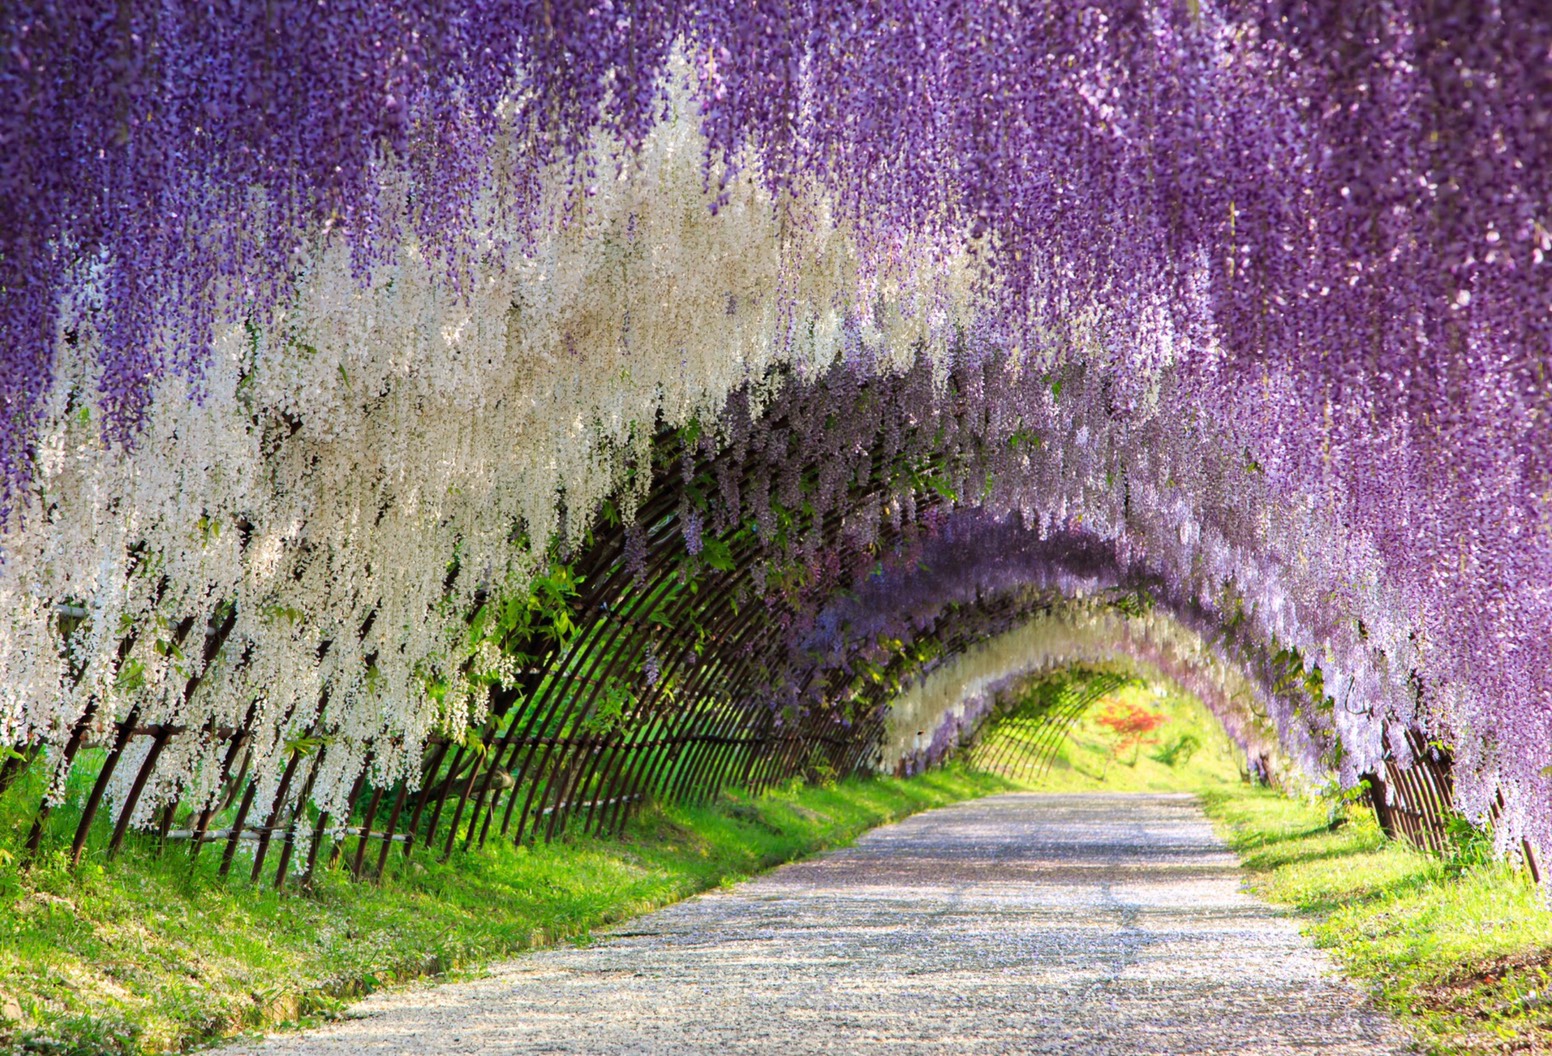 The Great Wisteria Flower Arch, by DK Tazunoki